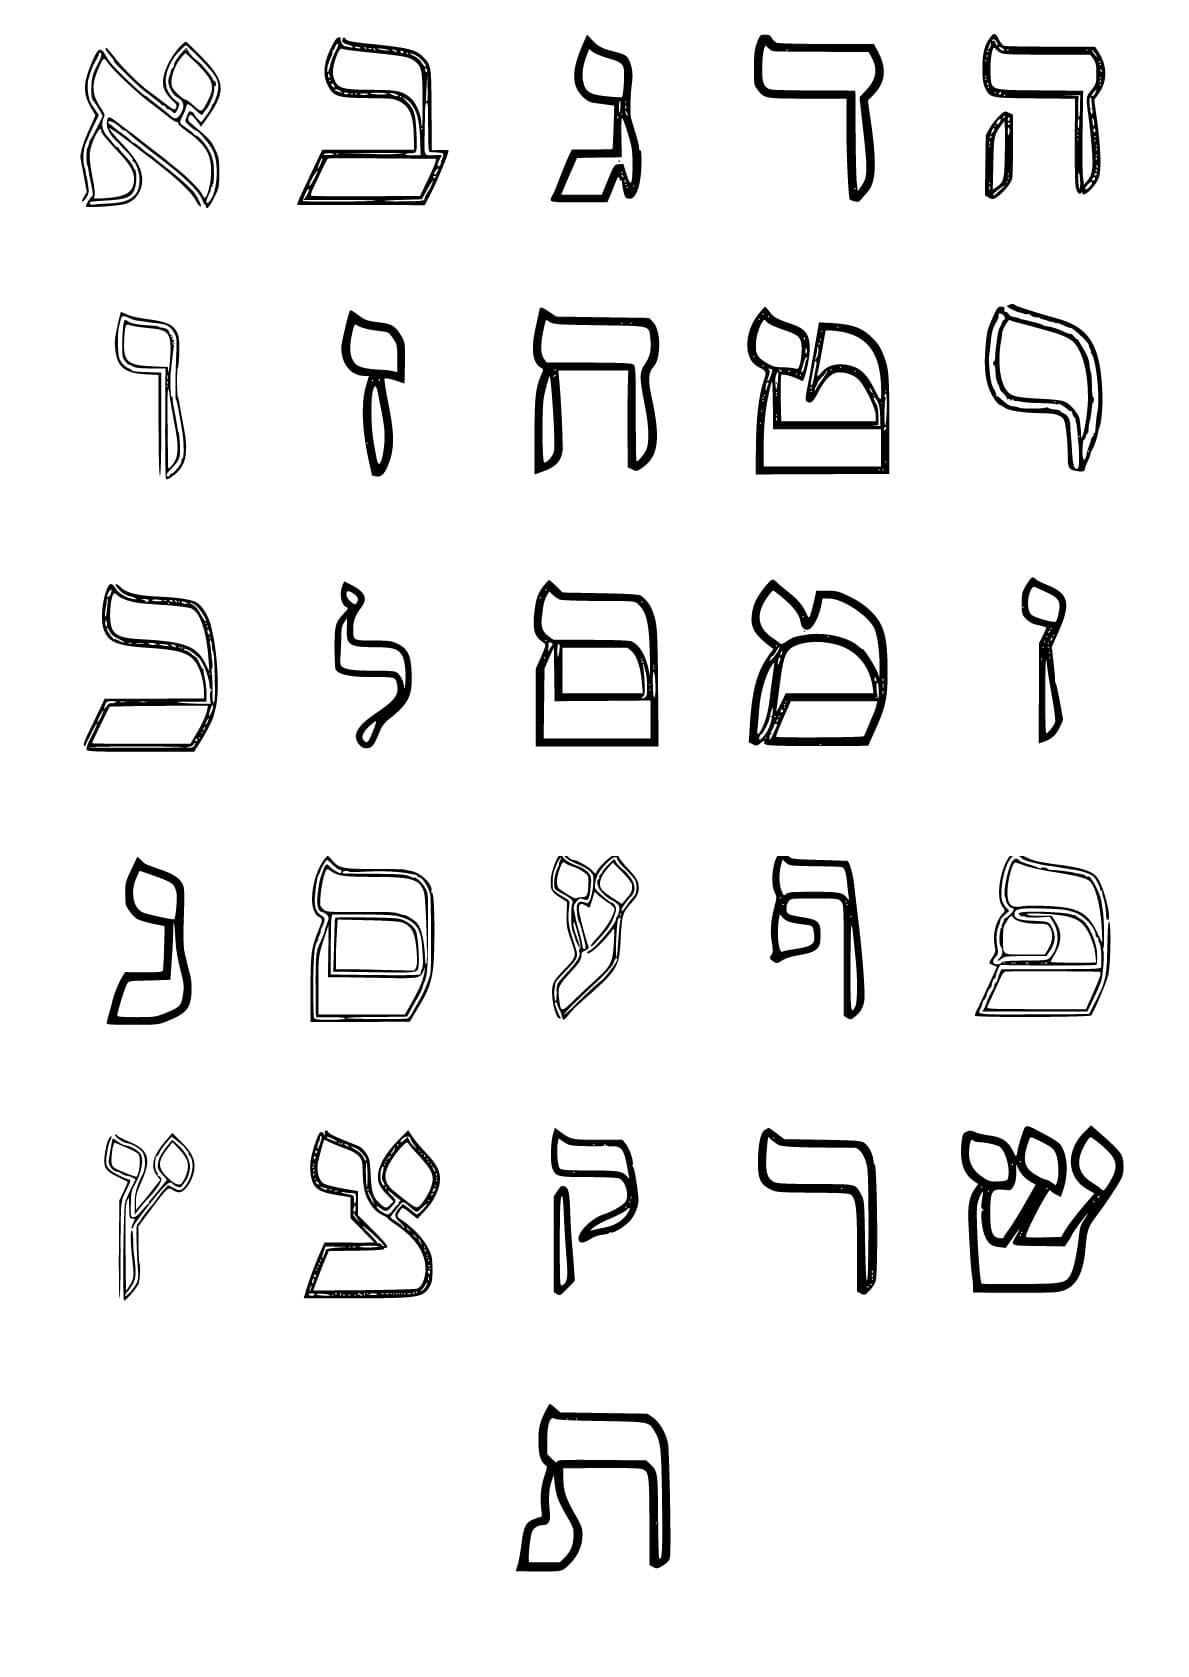 Hebrew Alphabet coloring pages - ColoringLib